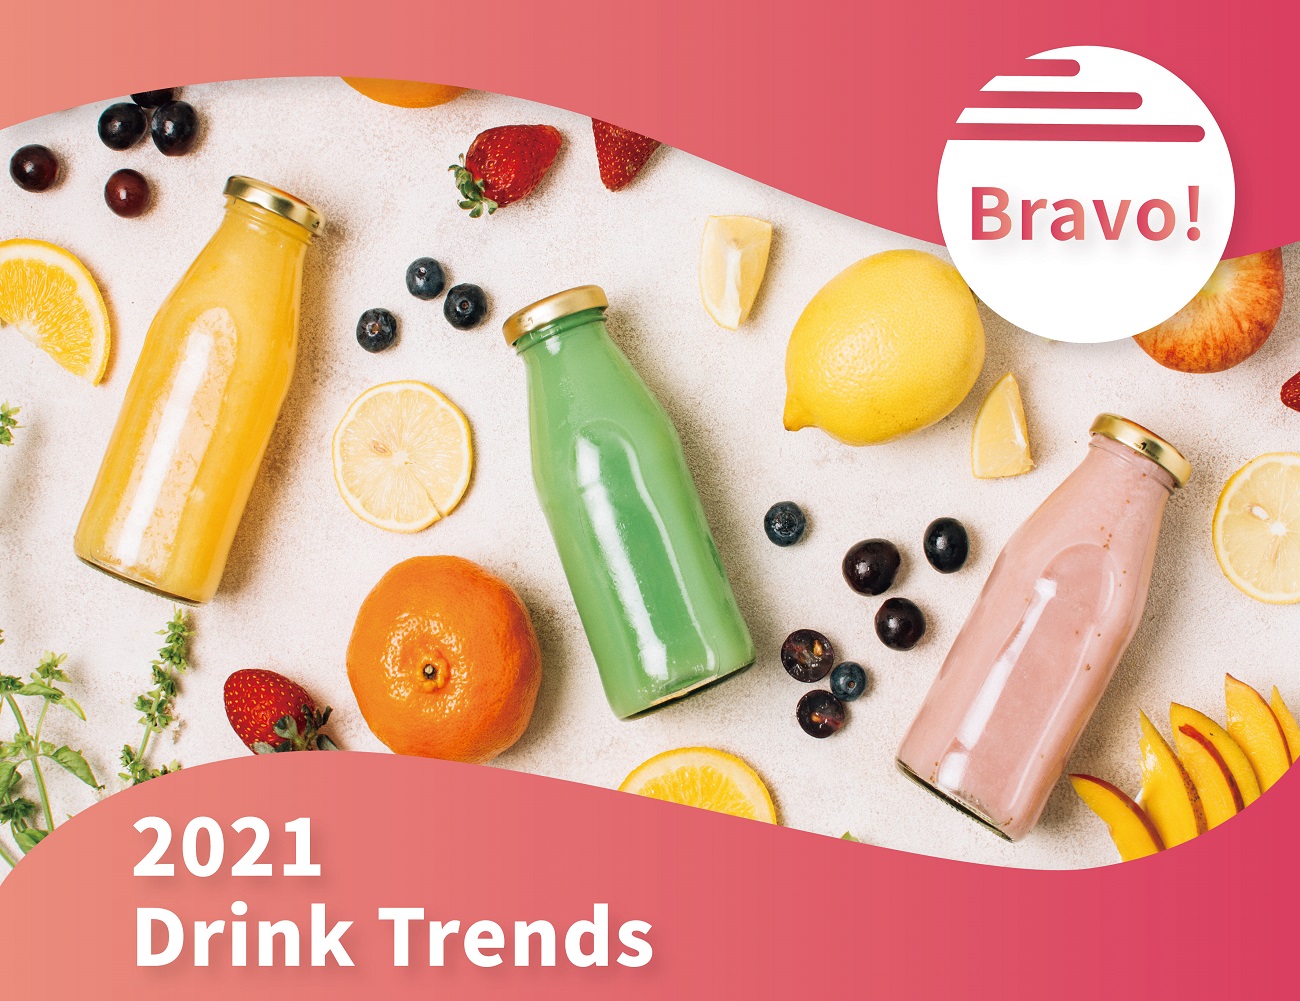 2021 Global Drink Trends!